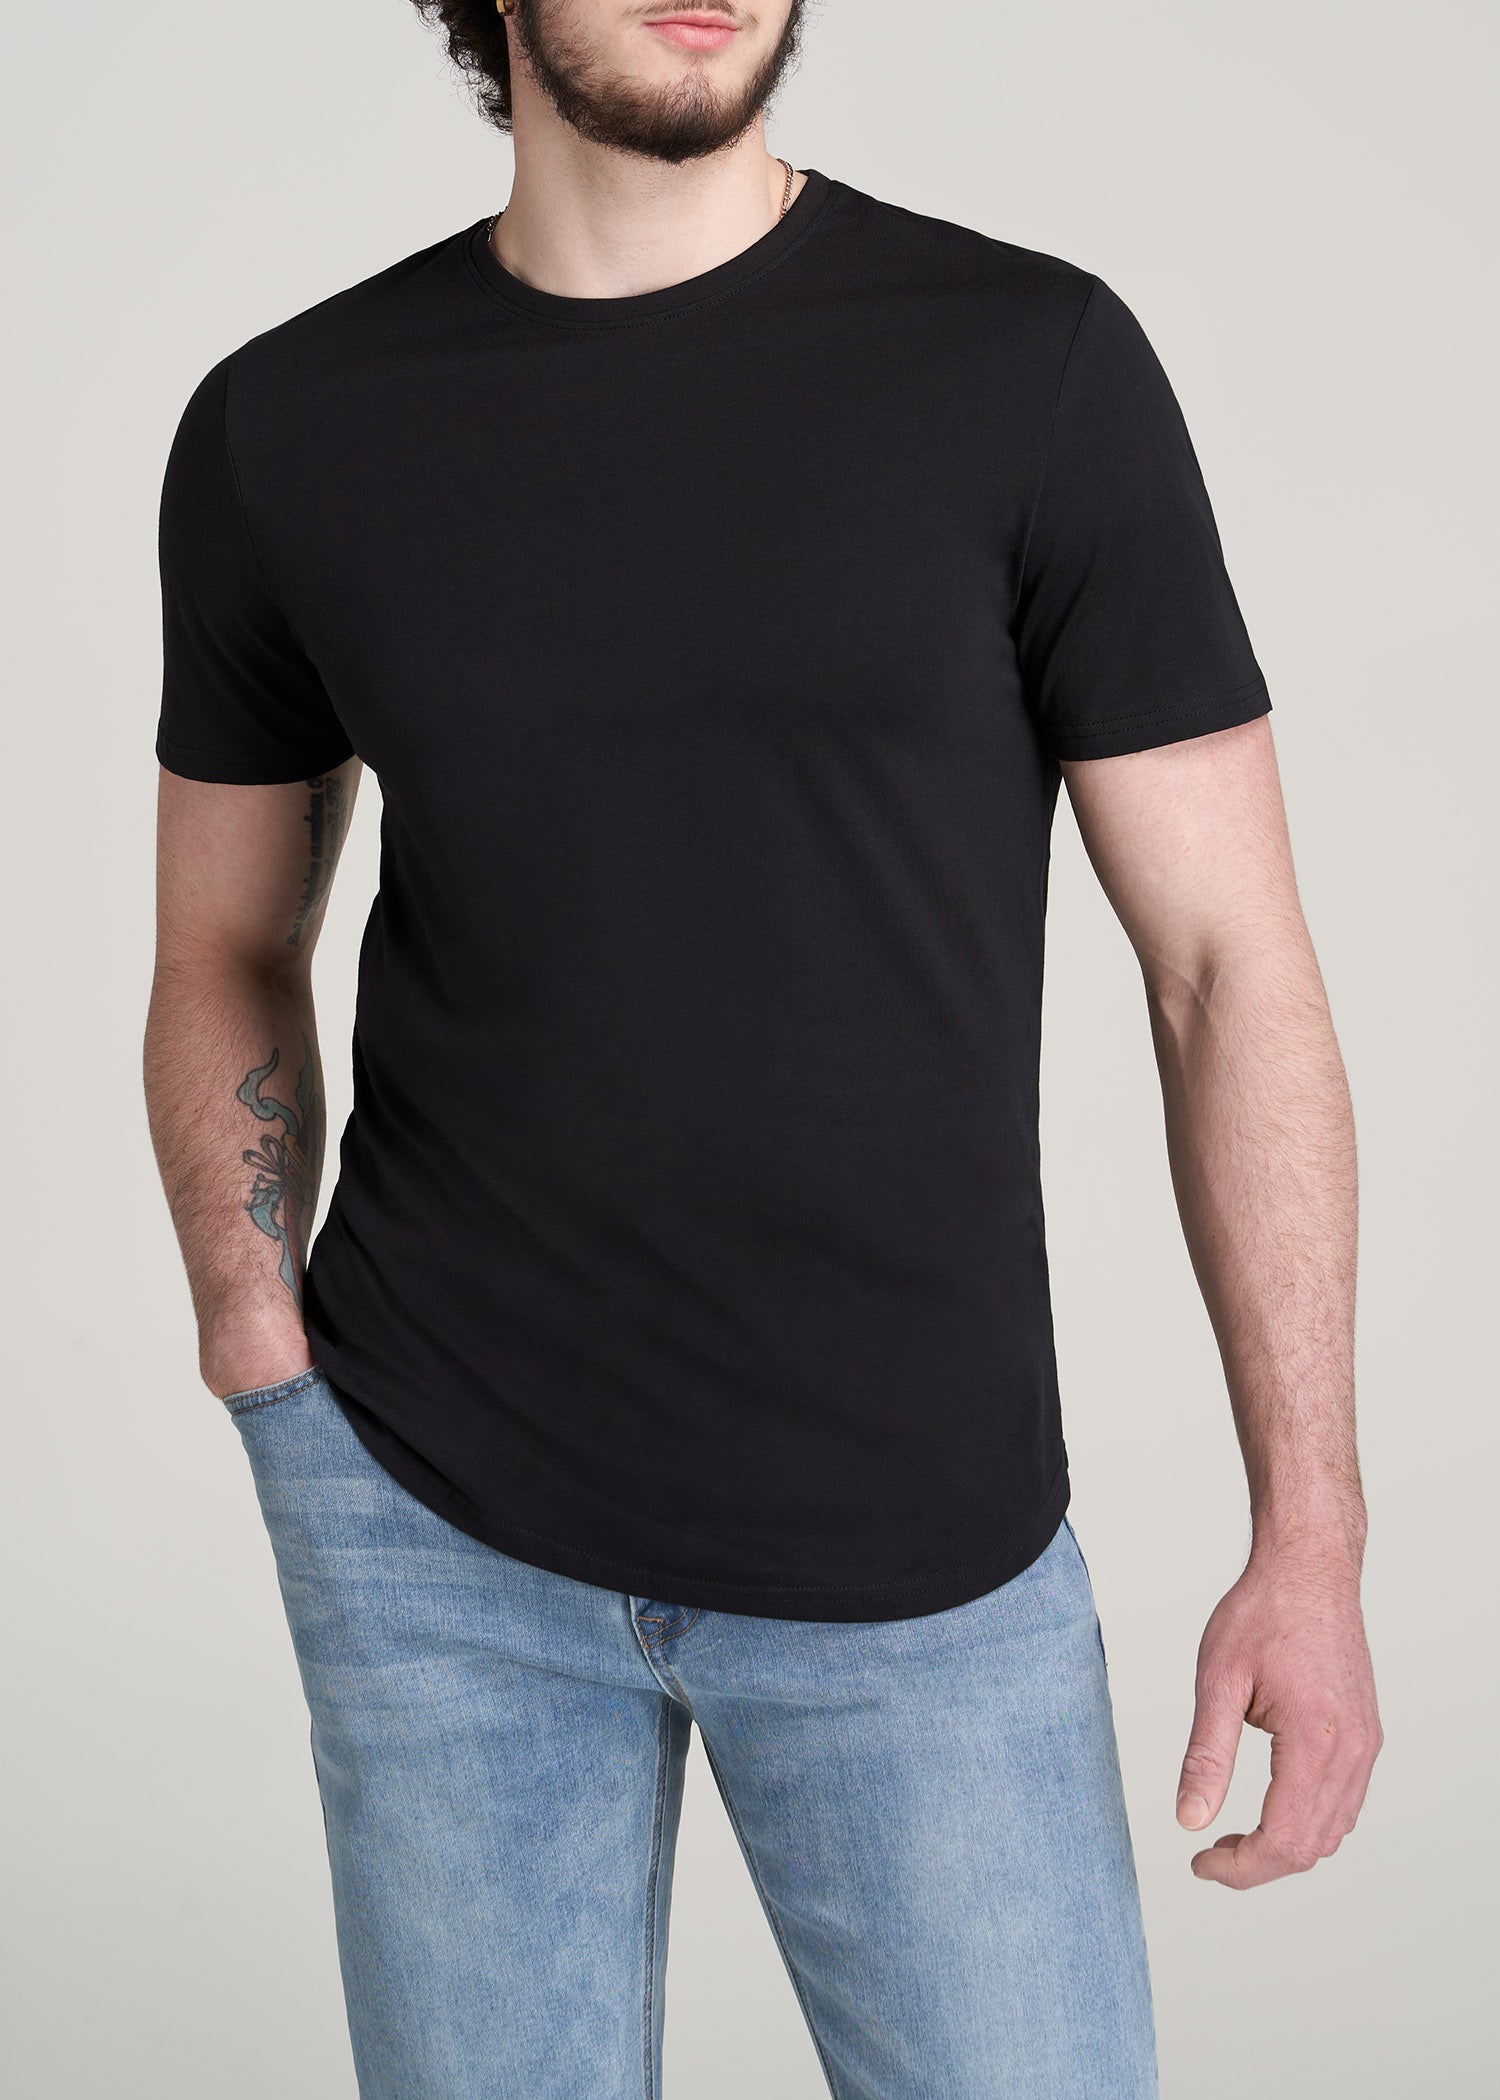 Everyday Scoop Bottom REGULAR FIT T-Shirt for Tall Men in Black